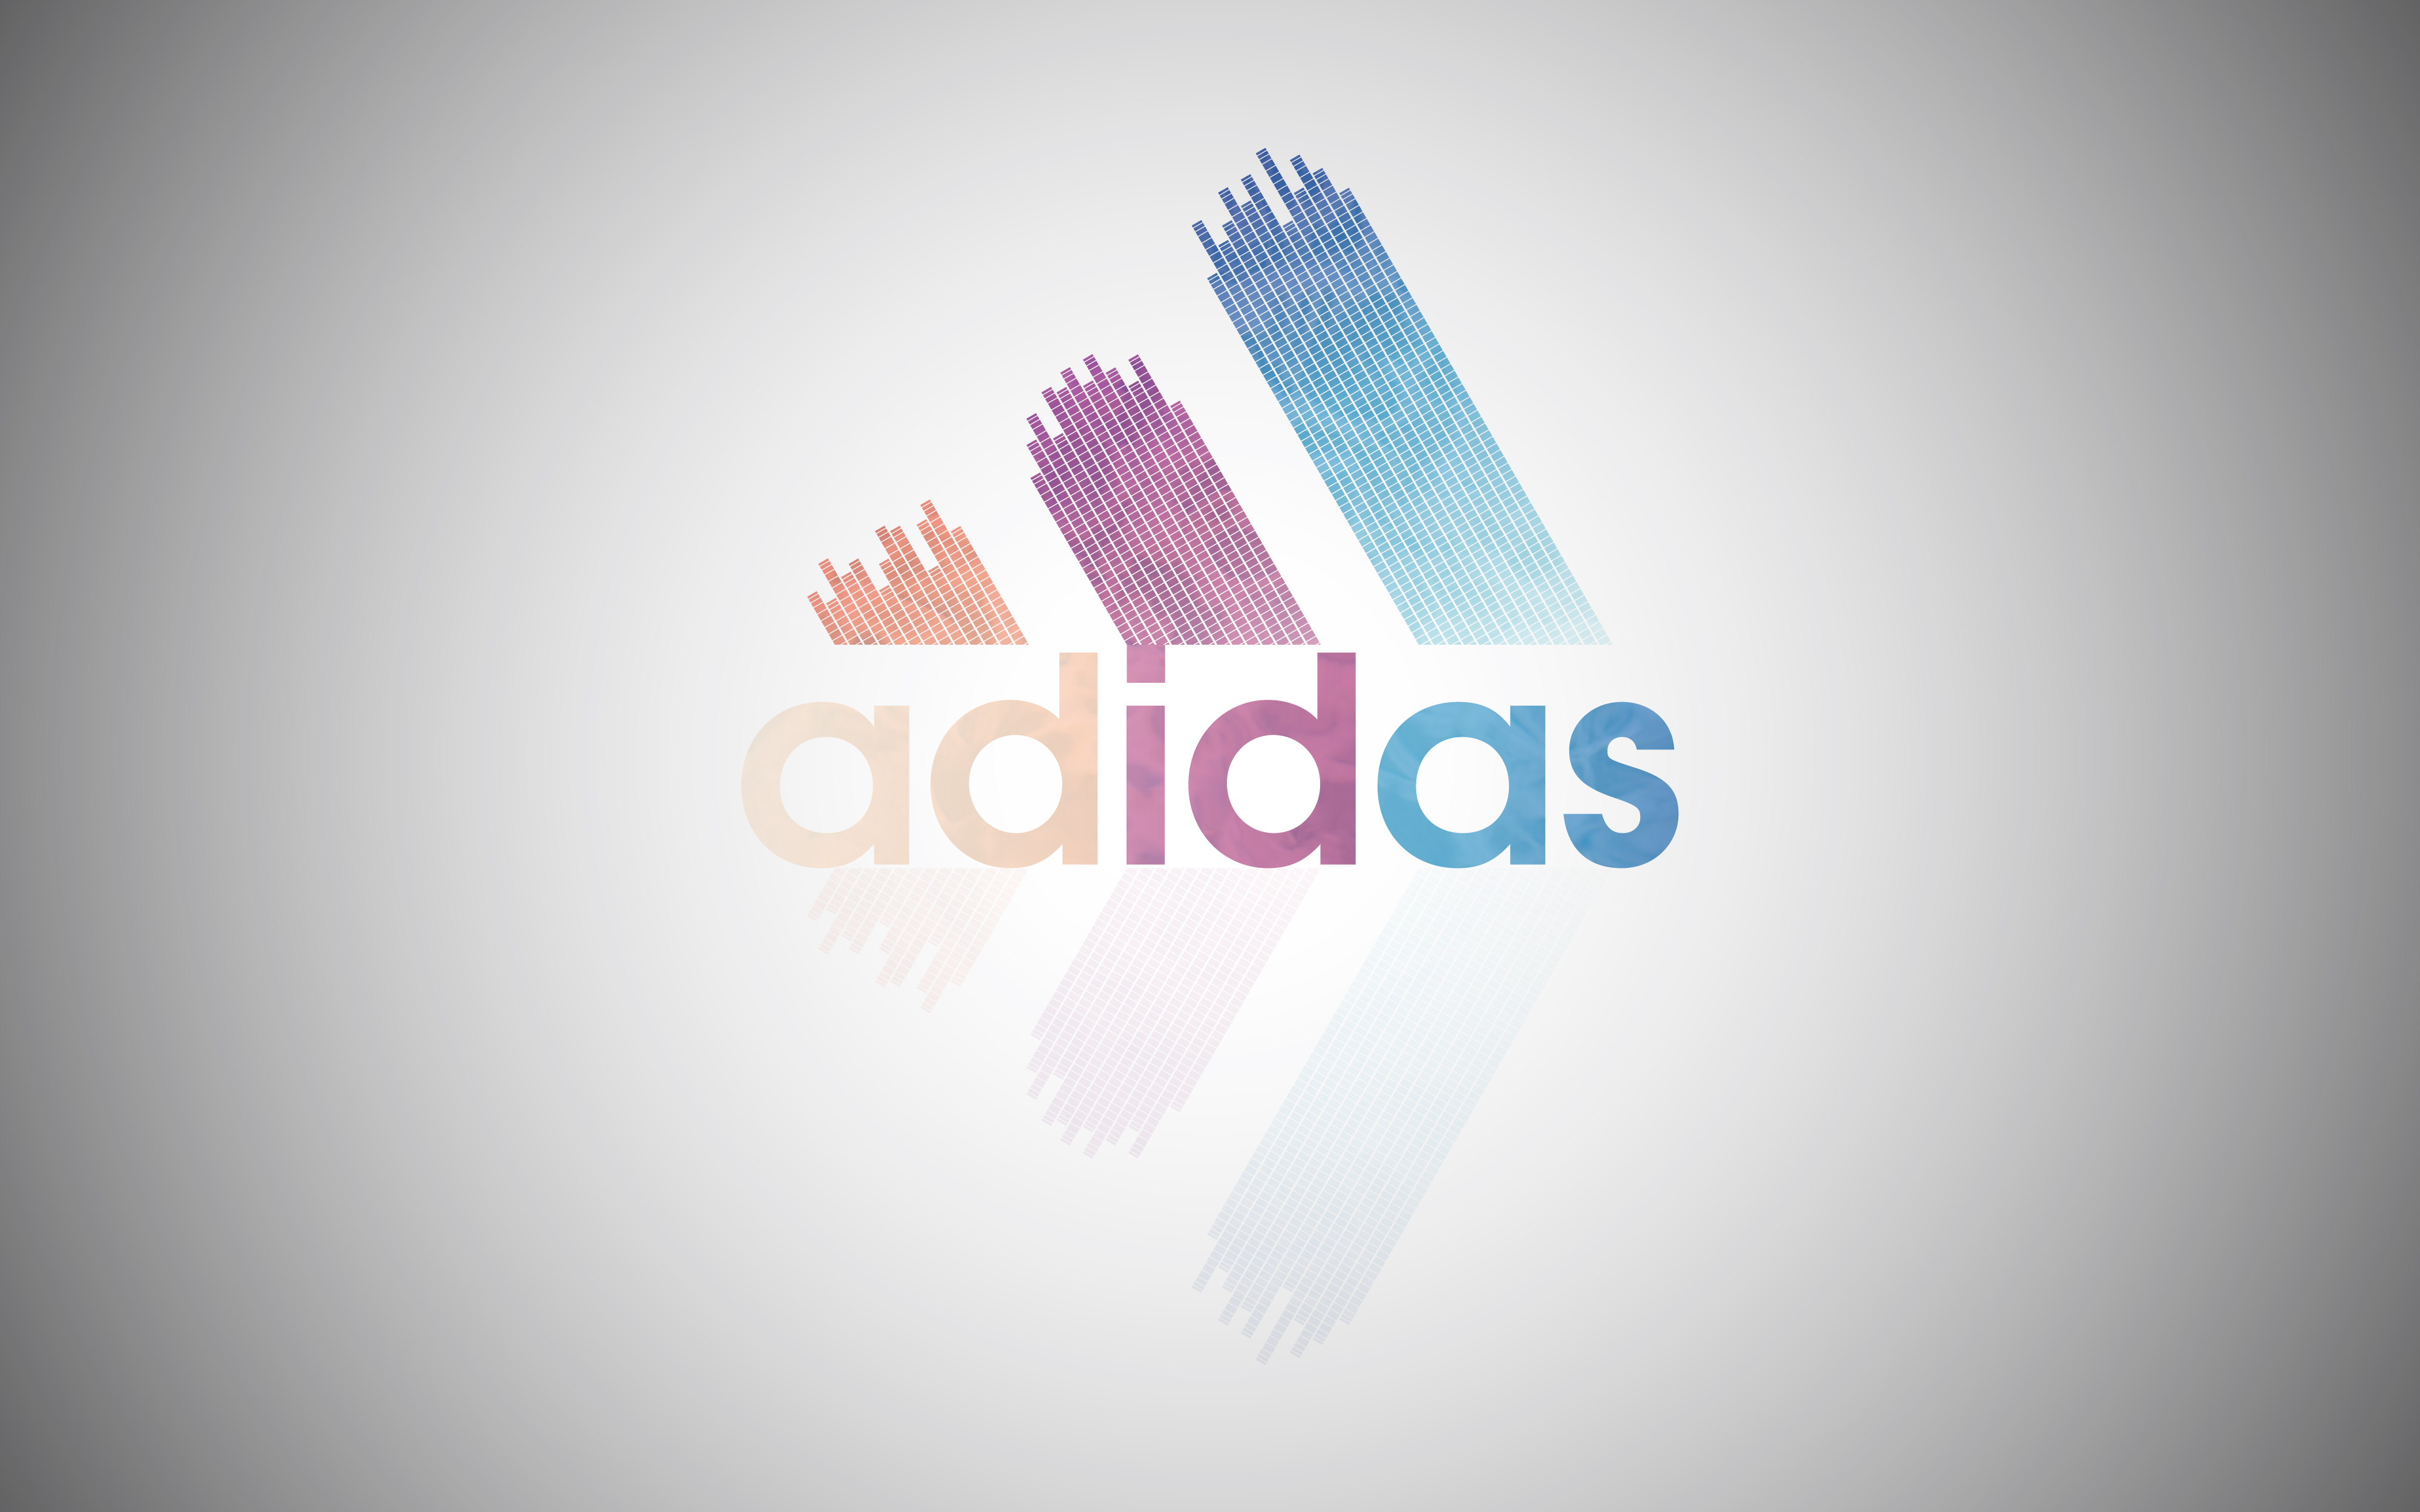 750 Adidas Wallpapers ideas | adidas wallpapers, adidas, adidas logo  wallpapers